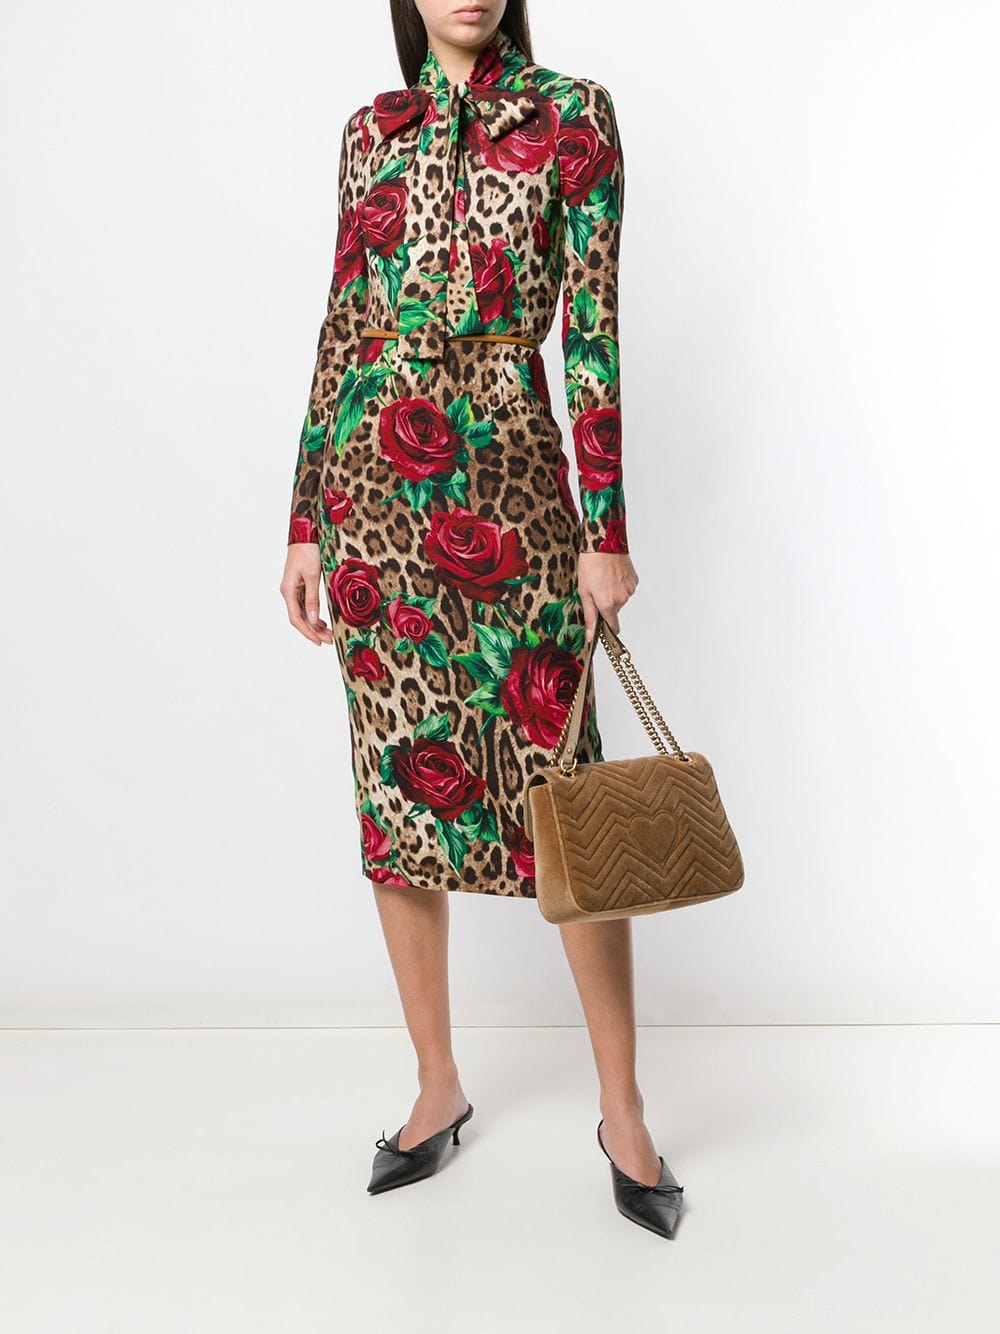 Dolce & Gabbana Rose & Leopard Print Charmeuse Dress